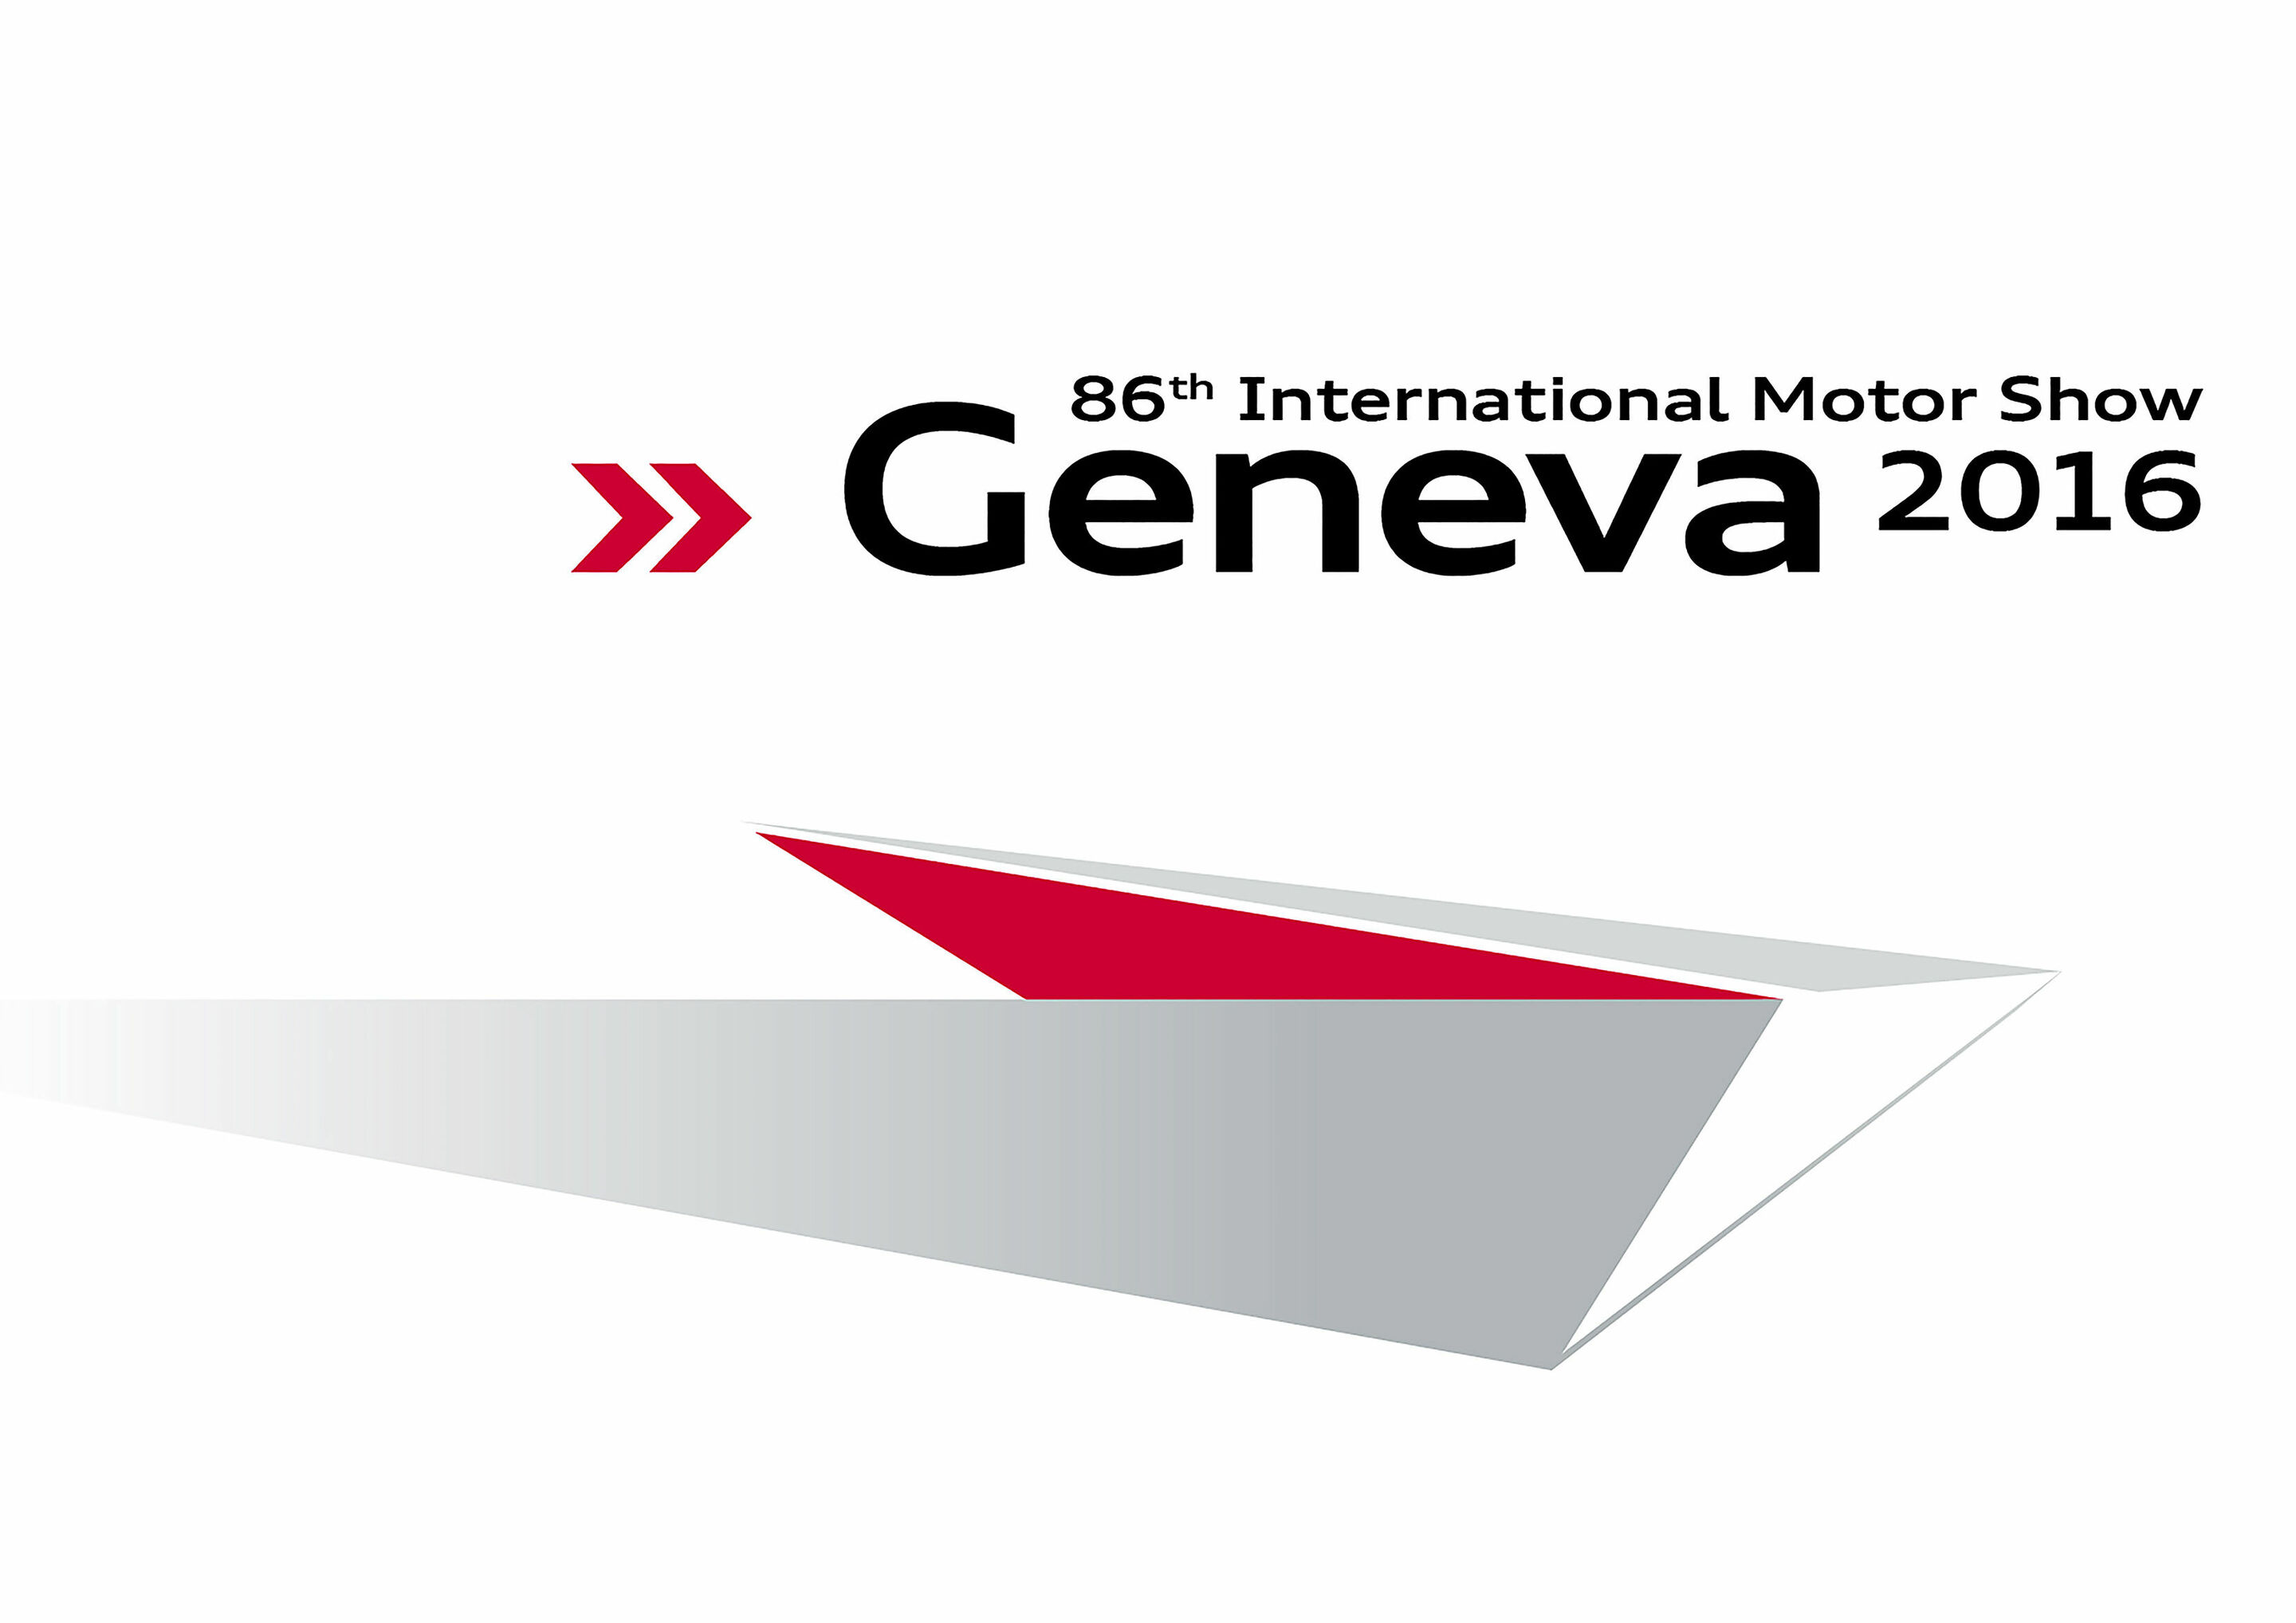 86th International Motor Show Geneva 2016